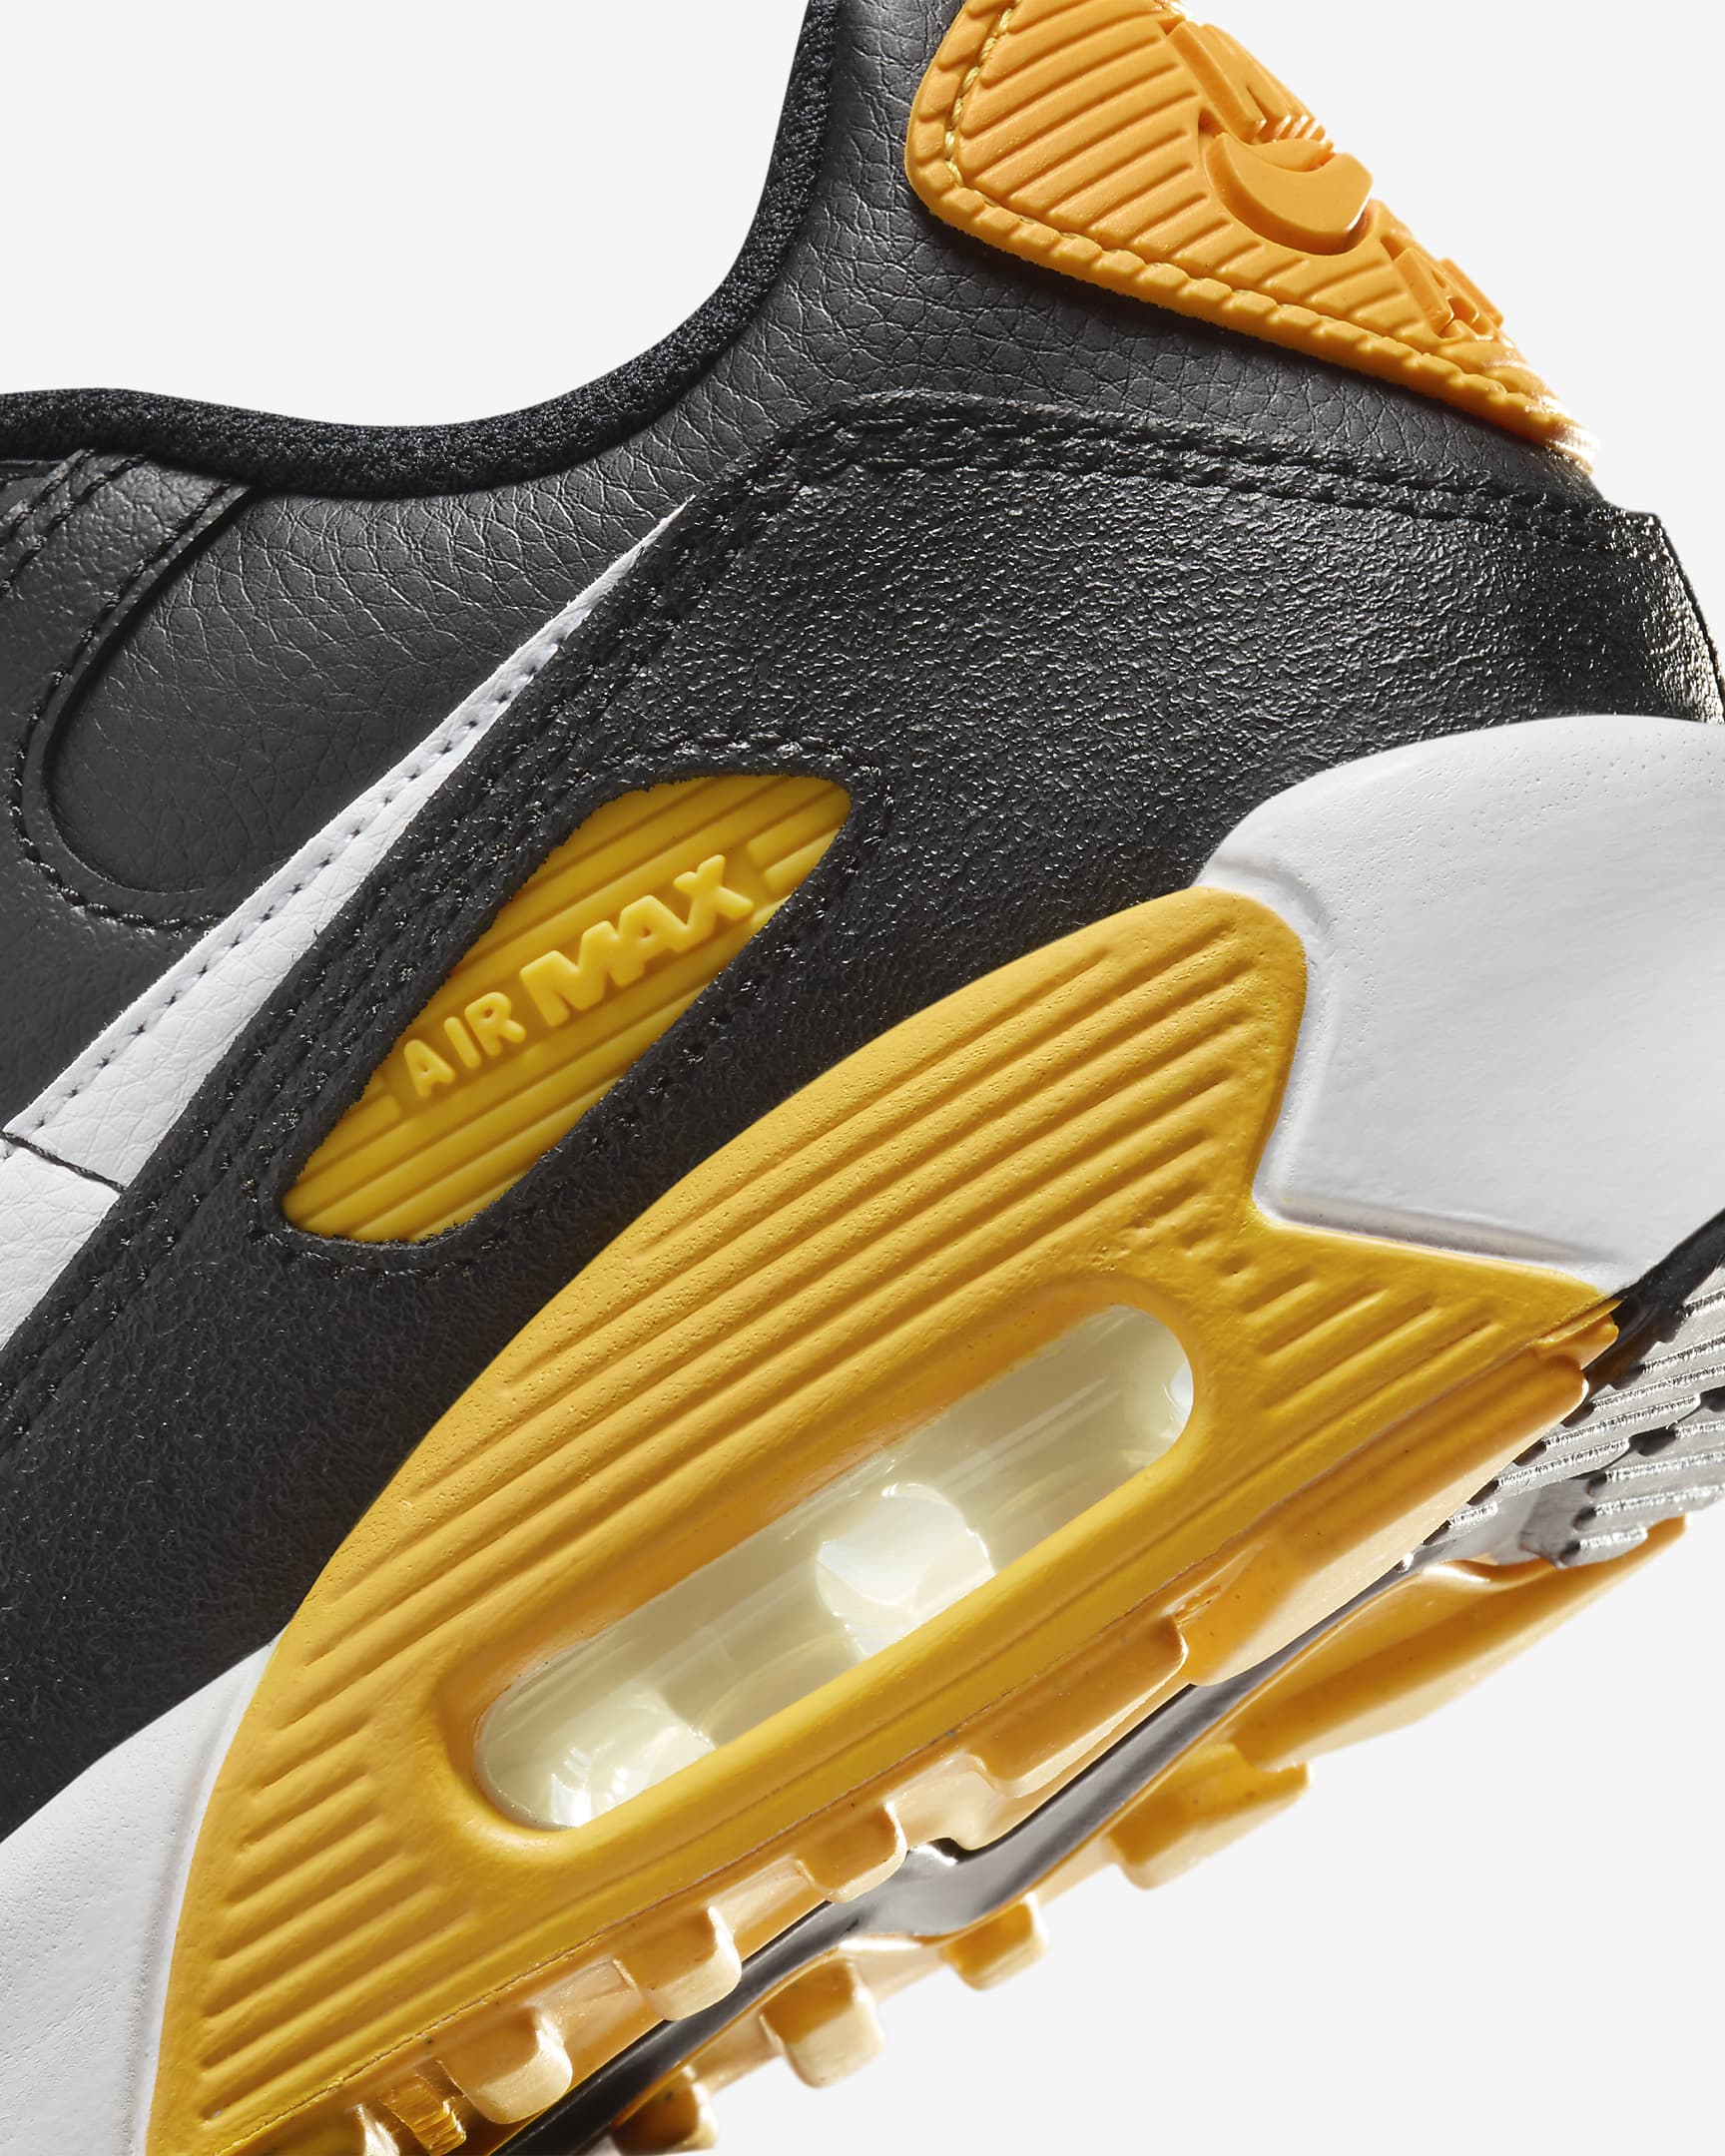 Nike Air Max 90 LTR Older Kids' Shoes - Black/University Gold/White